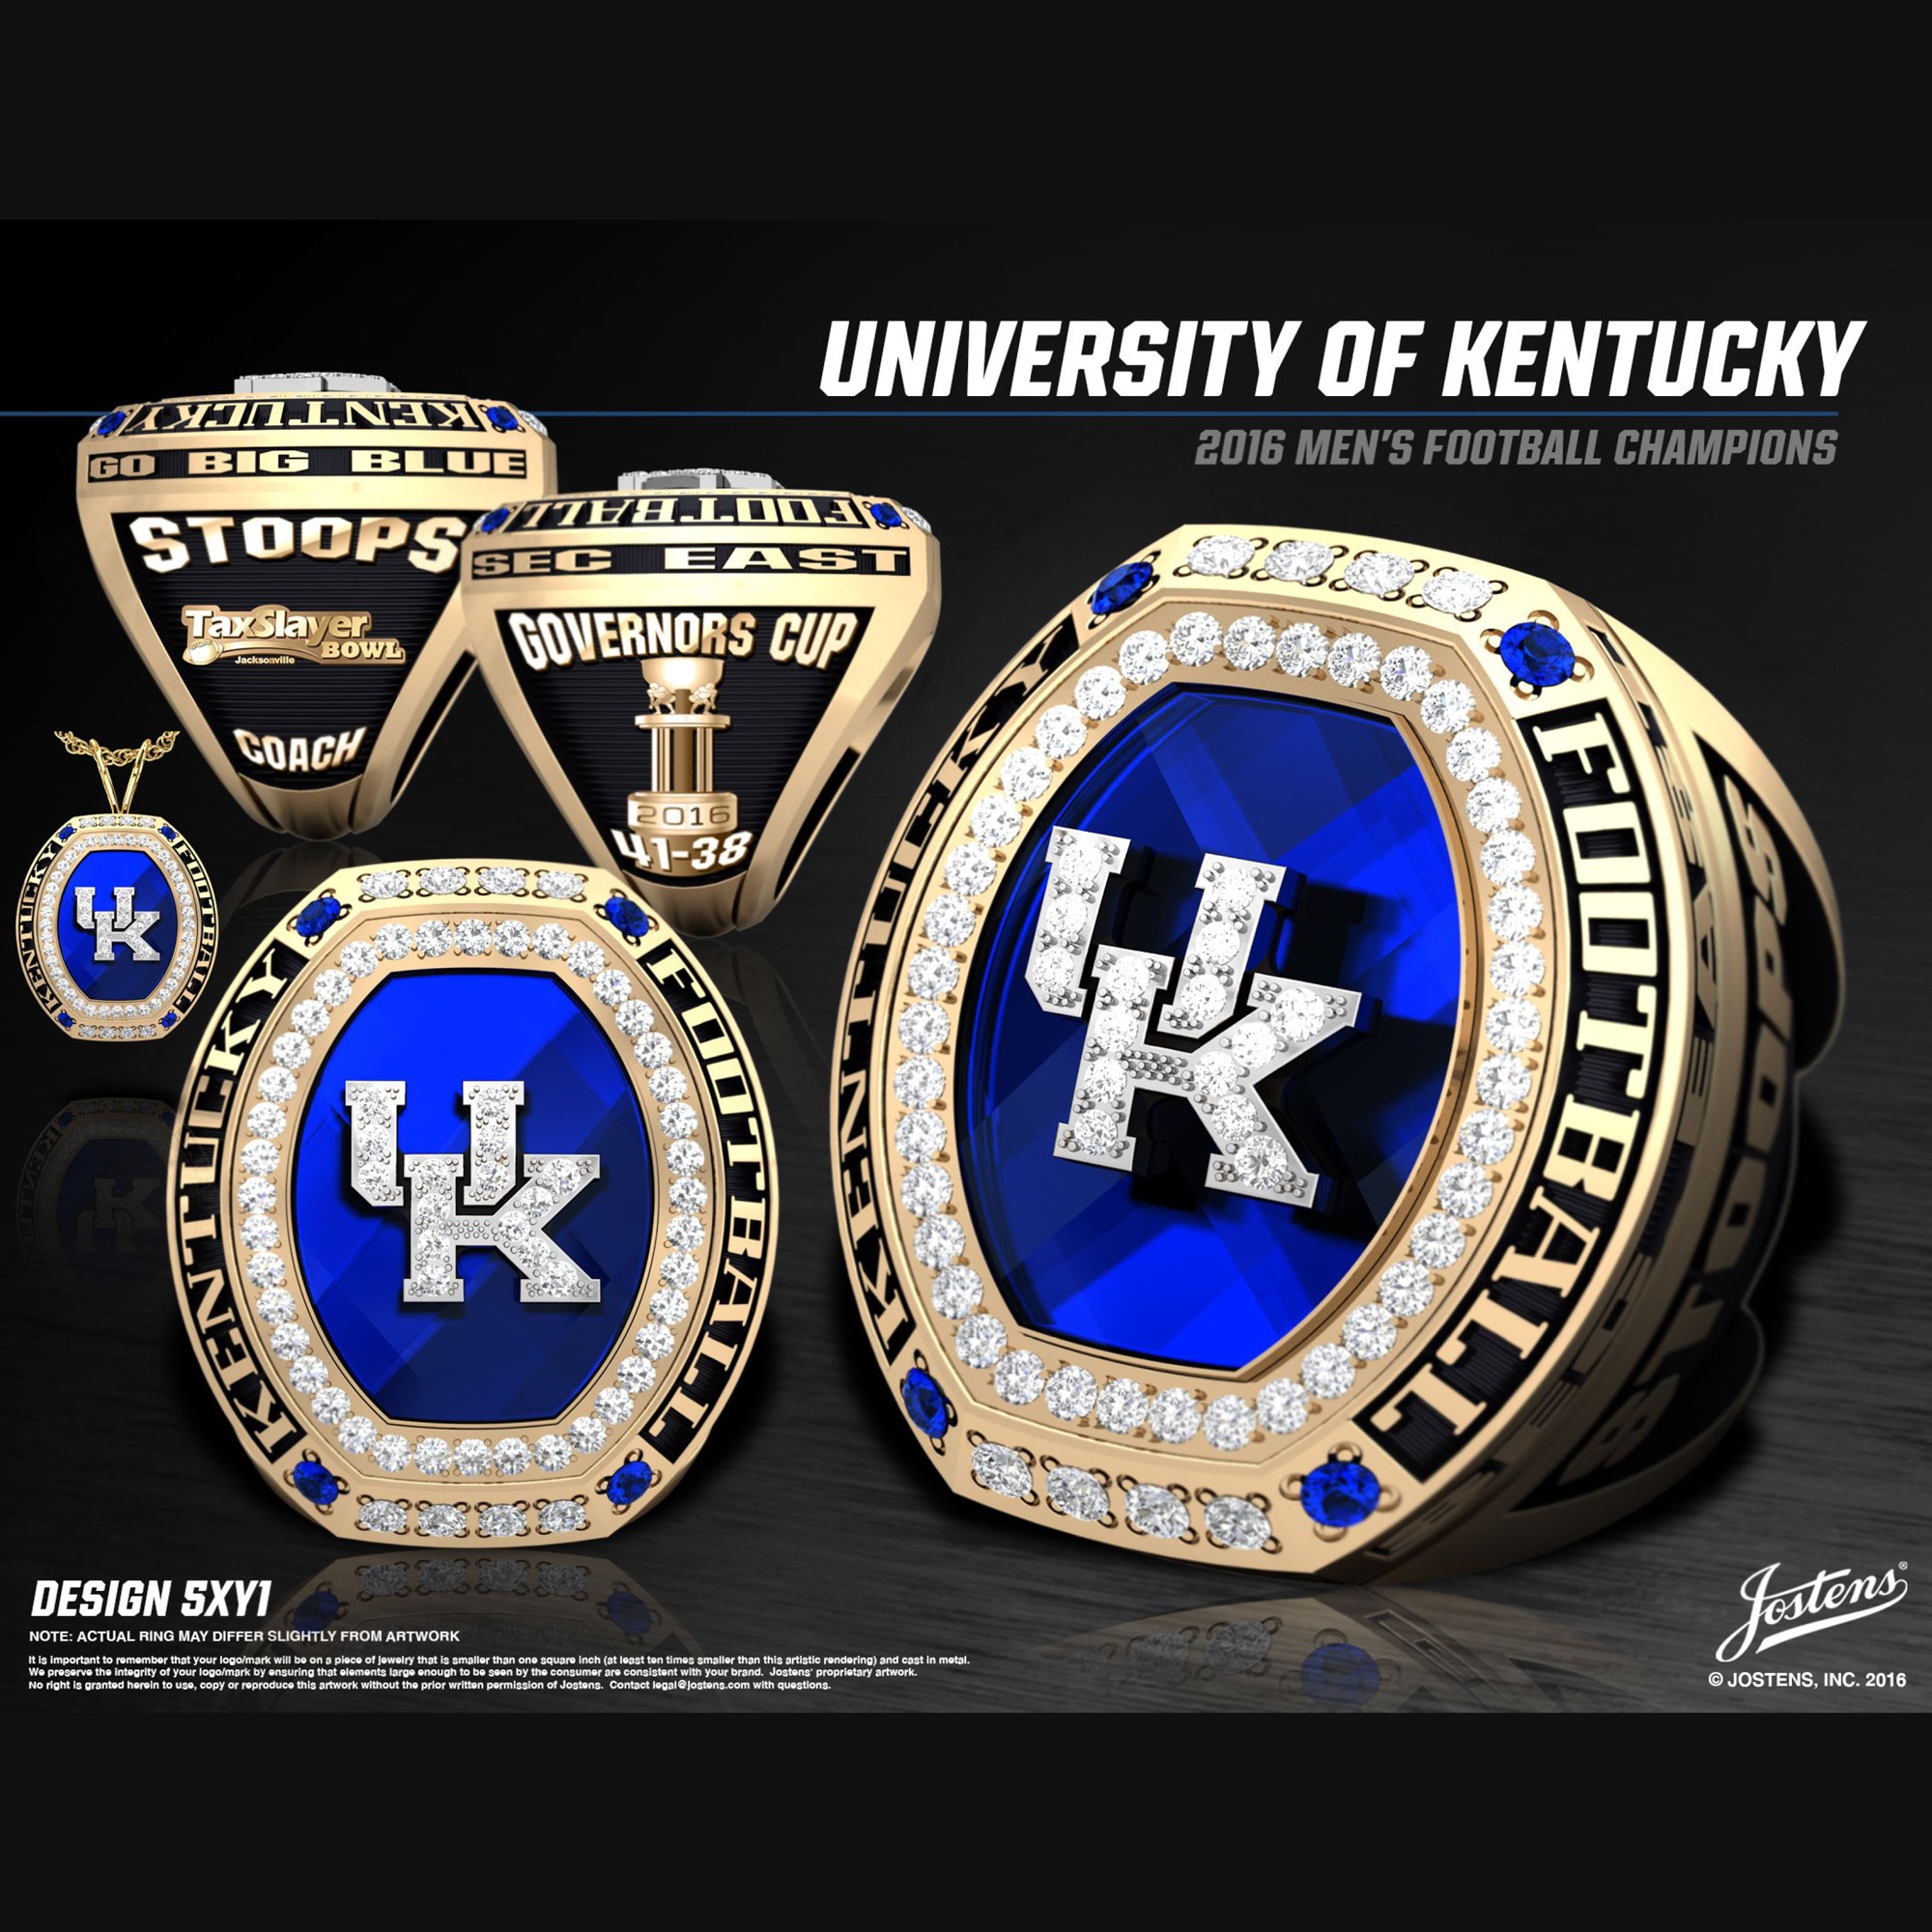 University of Kentucky Men's Football 2016 SEC East Championship Ring